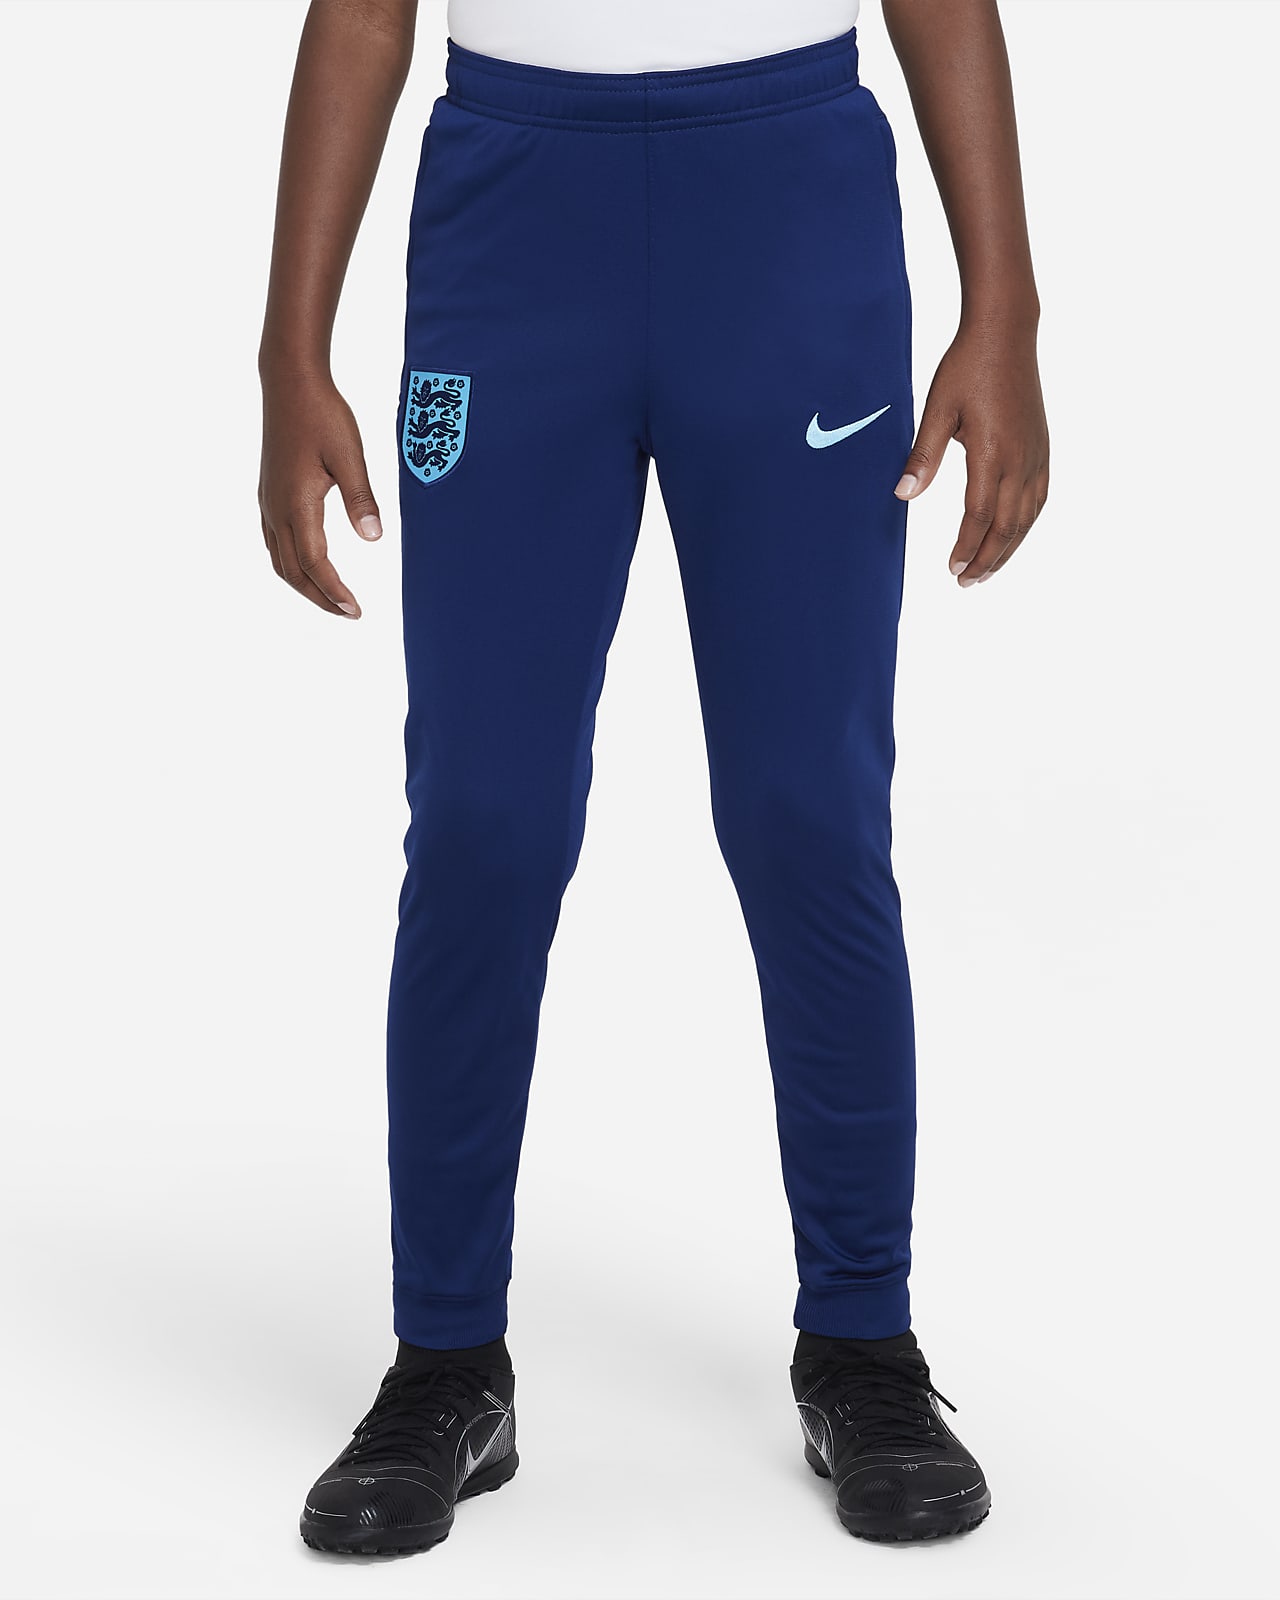 Peculiar Memorándum sección Inglaterra Strike Chándal de fútbol con capucha Nike Dri-FIT - Niño/a. Nike  ES